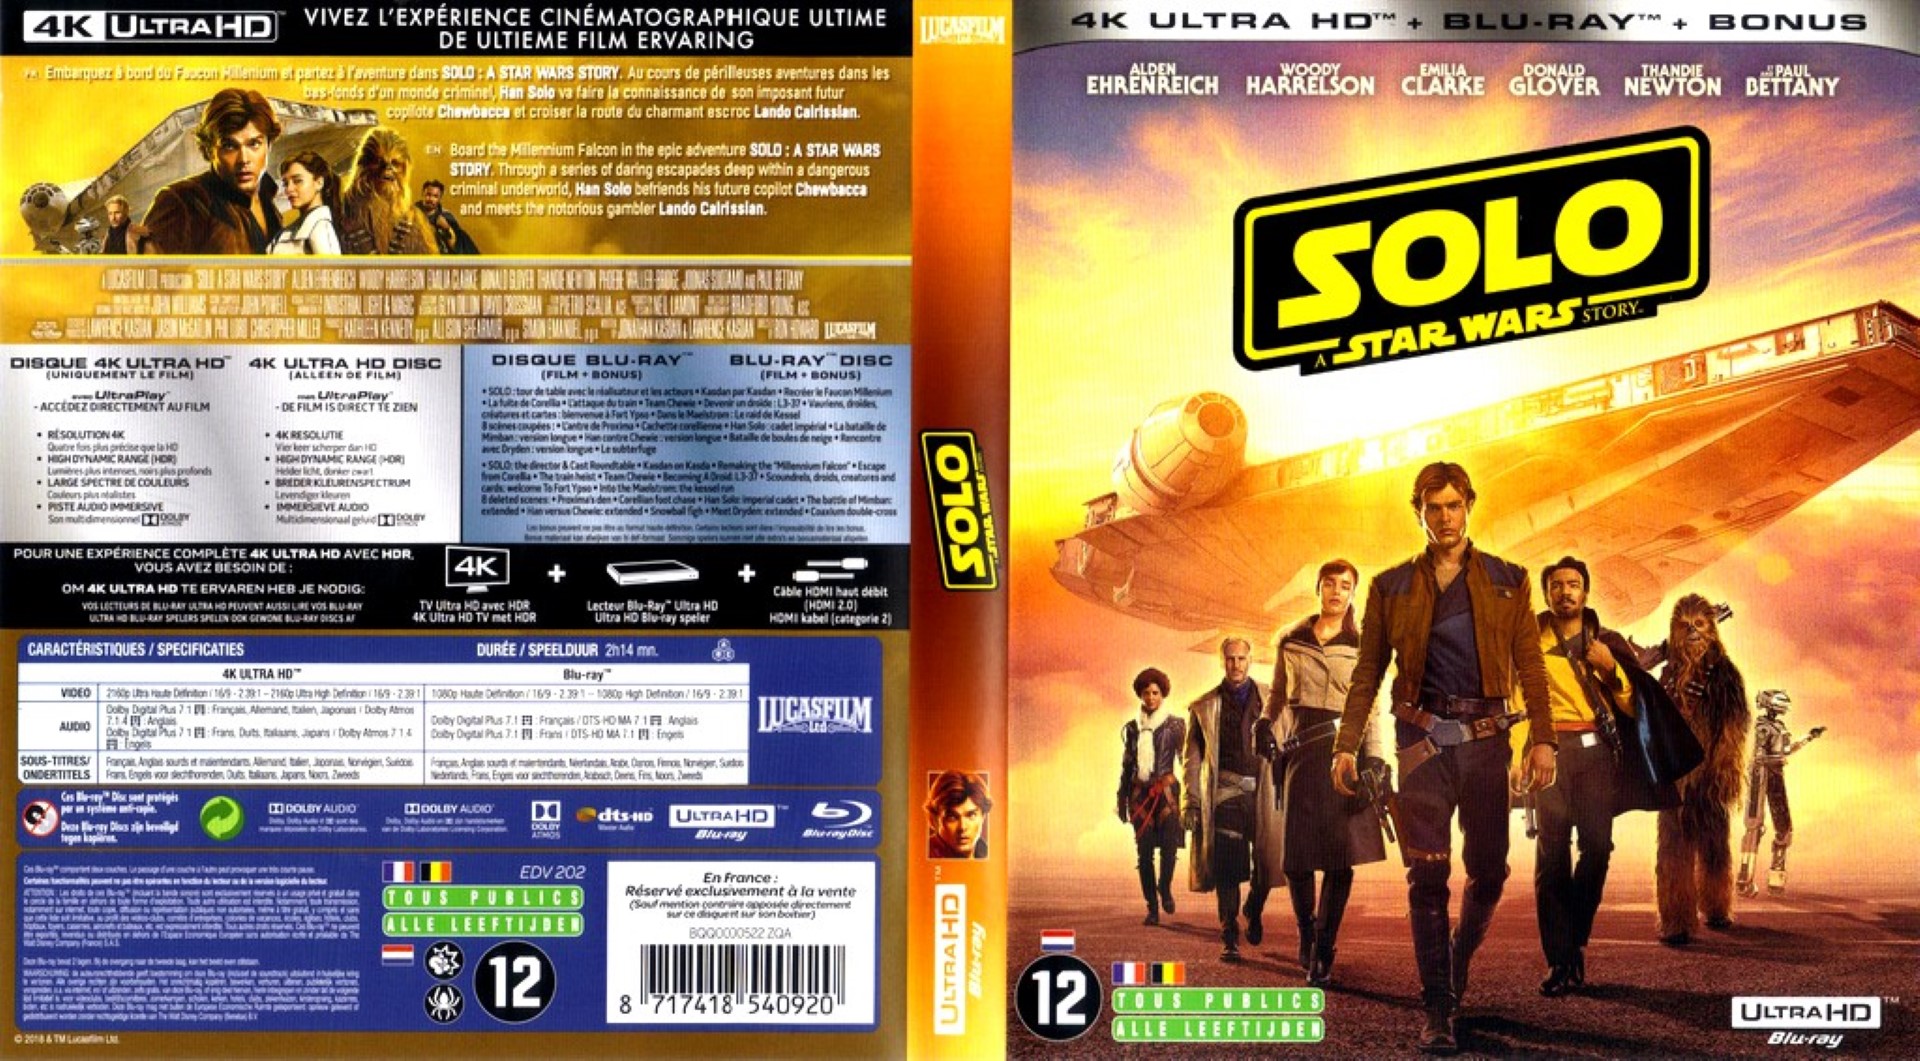 Jaquette DVD Star Wars - Solo A Star Wars Story - 4K (BLU-RAY)